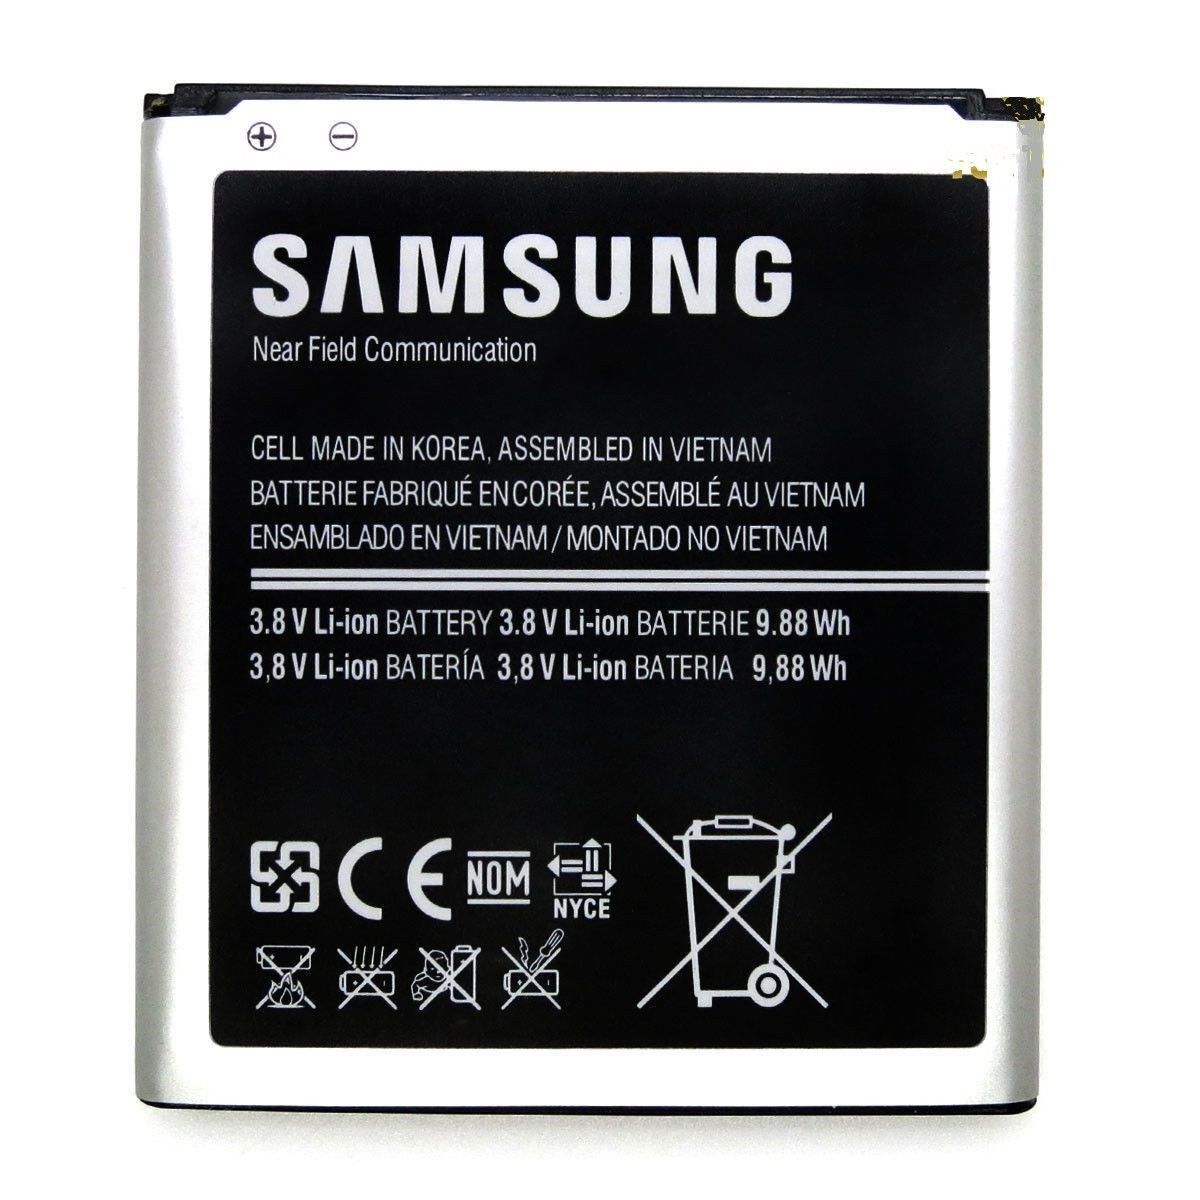 New Samsung B600BU OEM Cell Phone 3.8V Battery Galaxy S4 Active sgh i537 i545 - $21.99